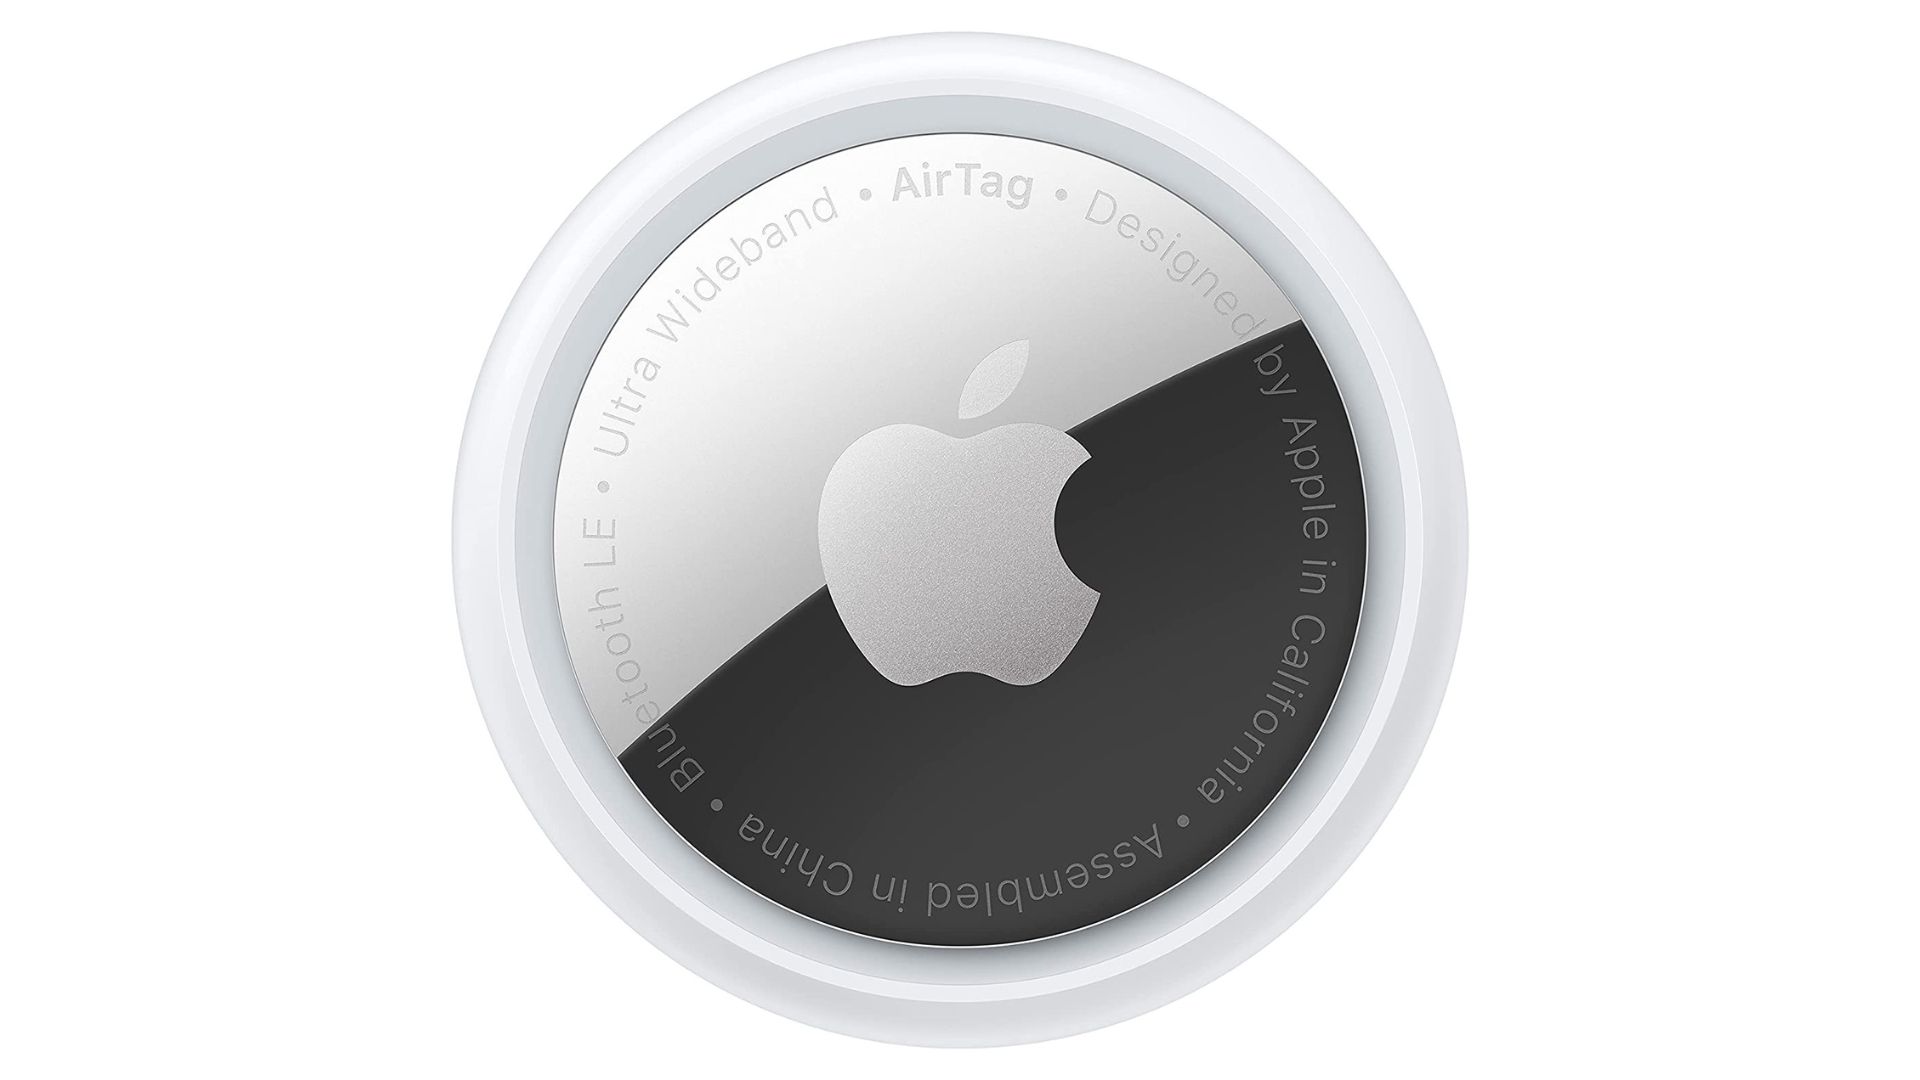 Luggage tracker: apple airtag